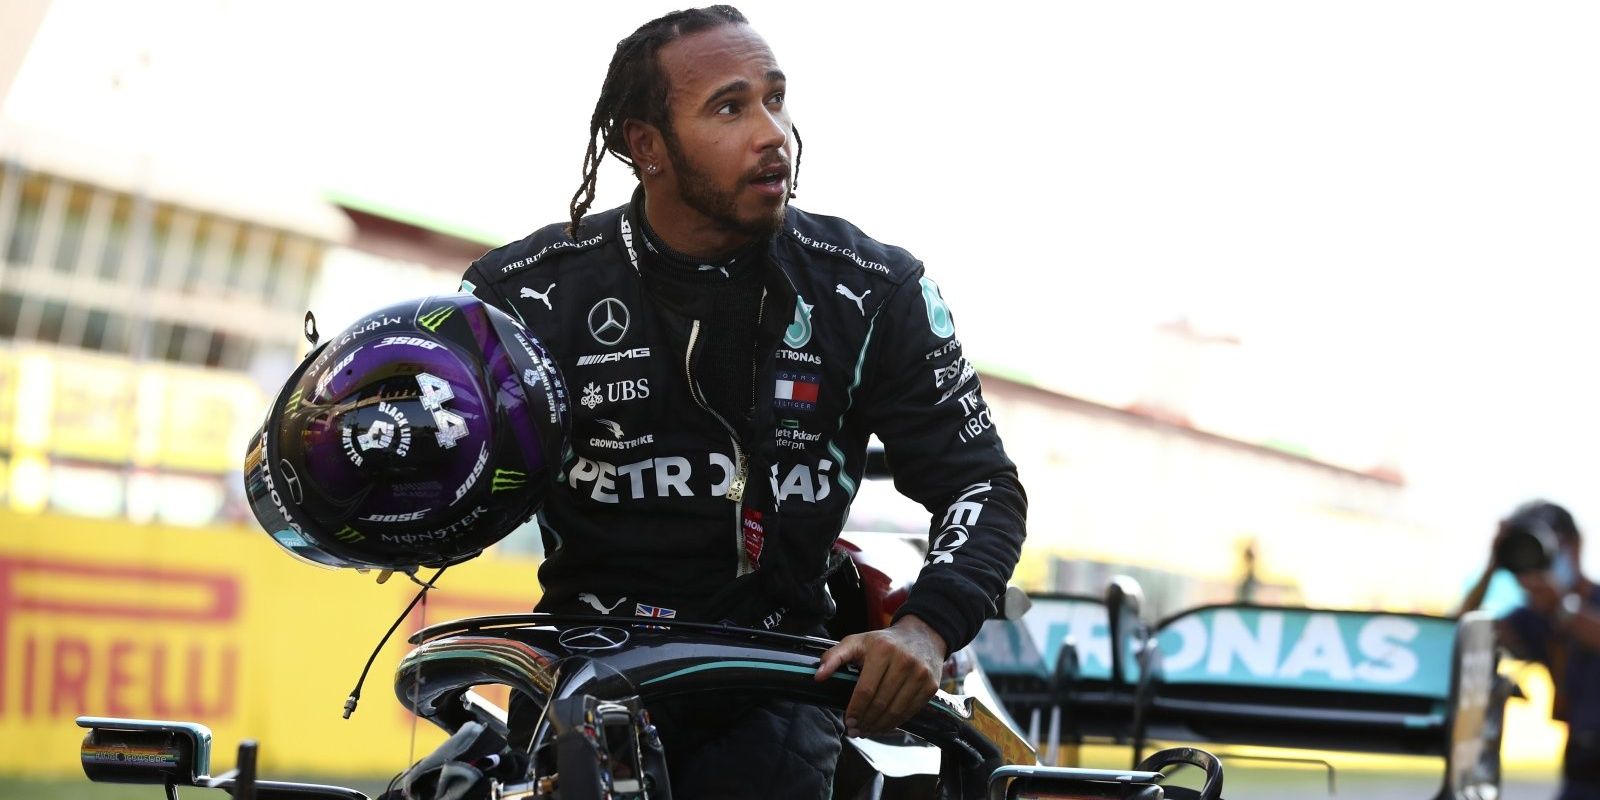 Mercedes driver Lewis Hamilton in Formula 1 Drive To Survive